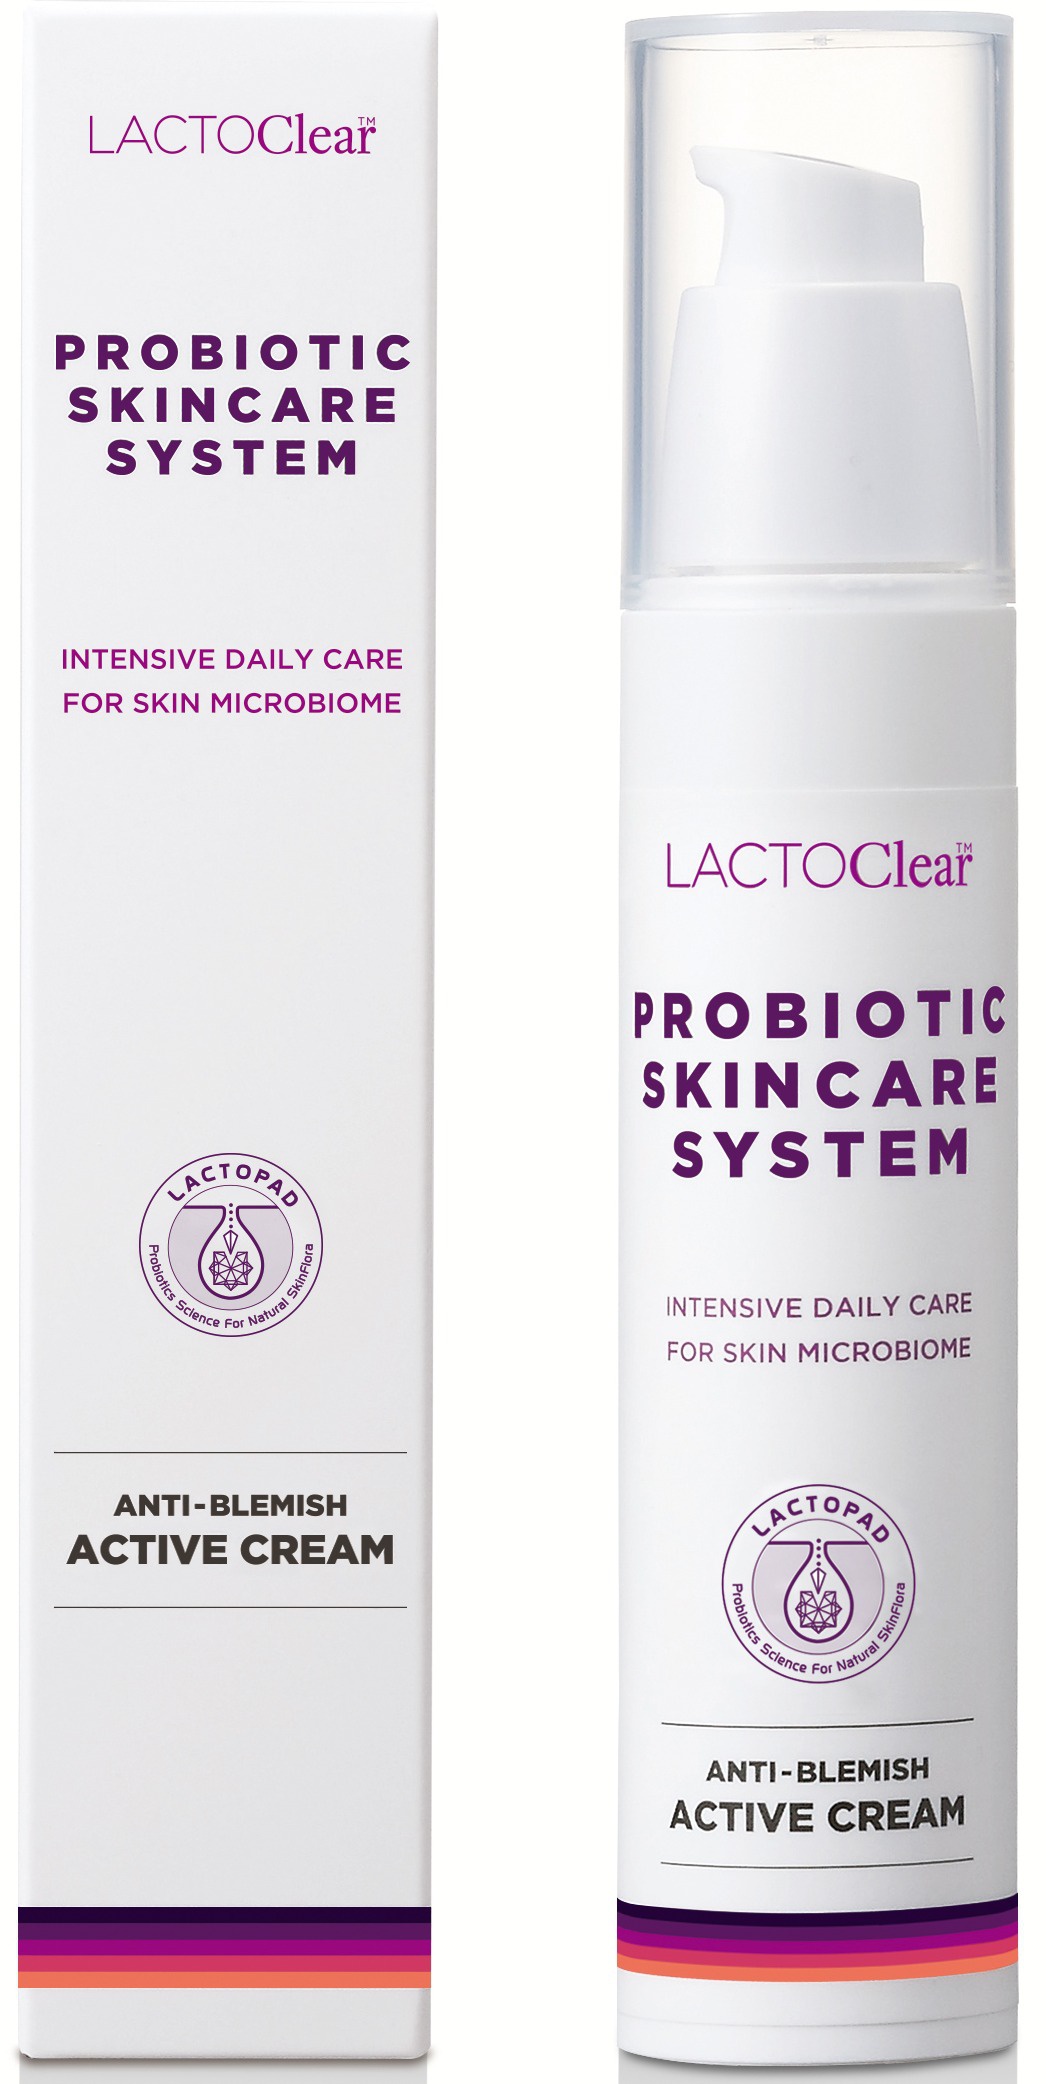 Lactoclear Anti-Blemish Active Cream